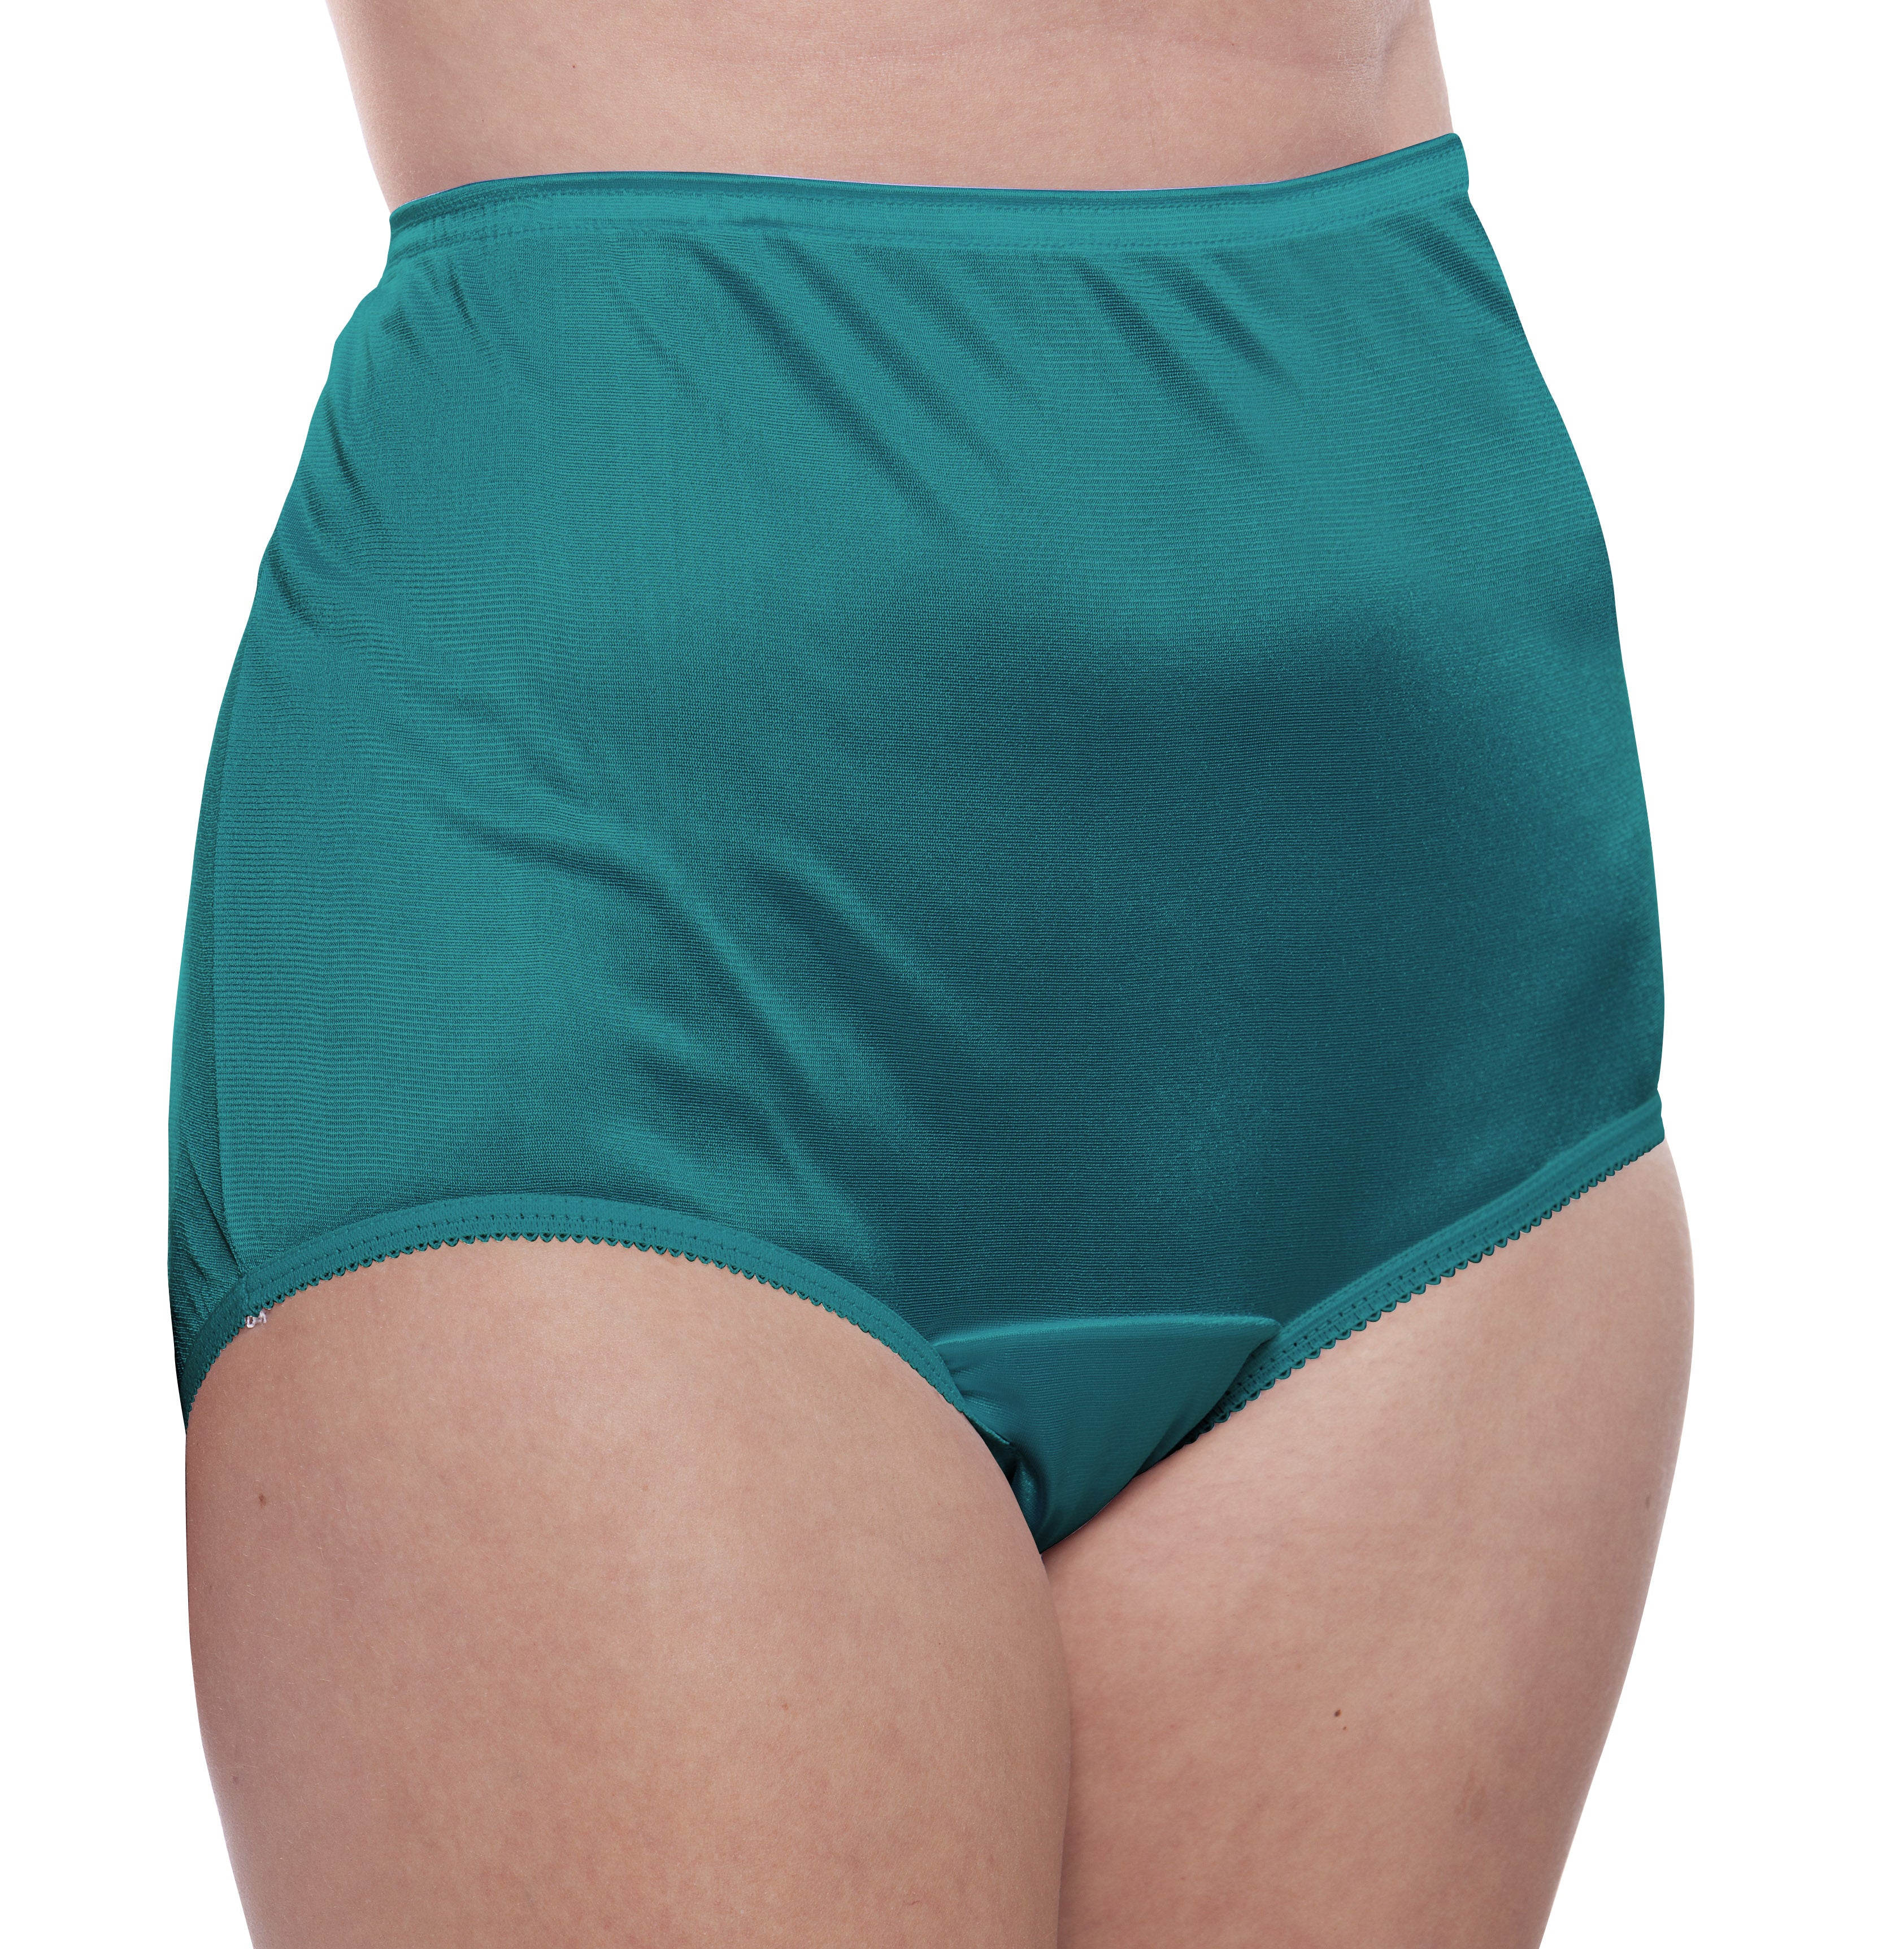 Teri Women's Full Cut Nylon Brief Panty - 4 Pack 331, White, 5 at